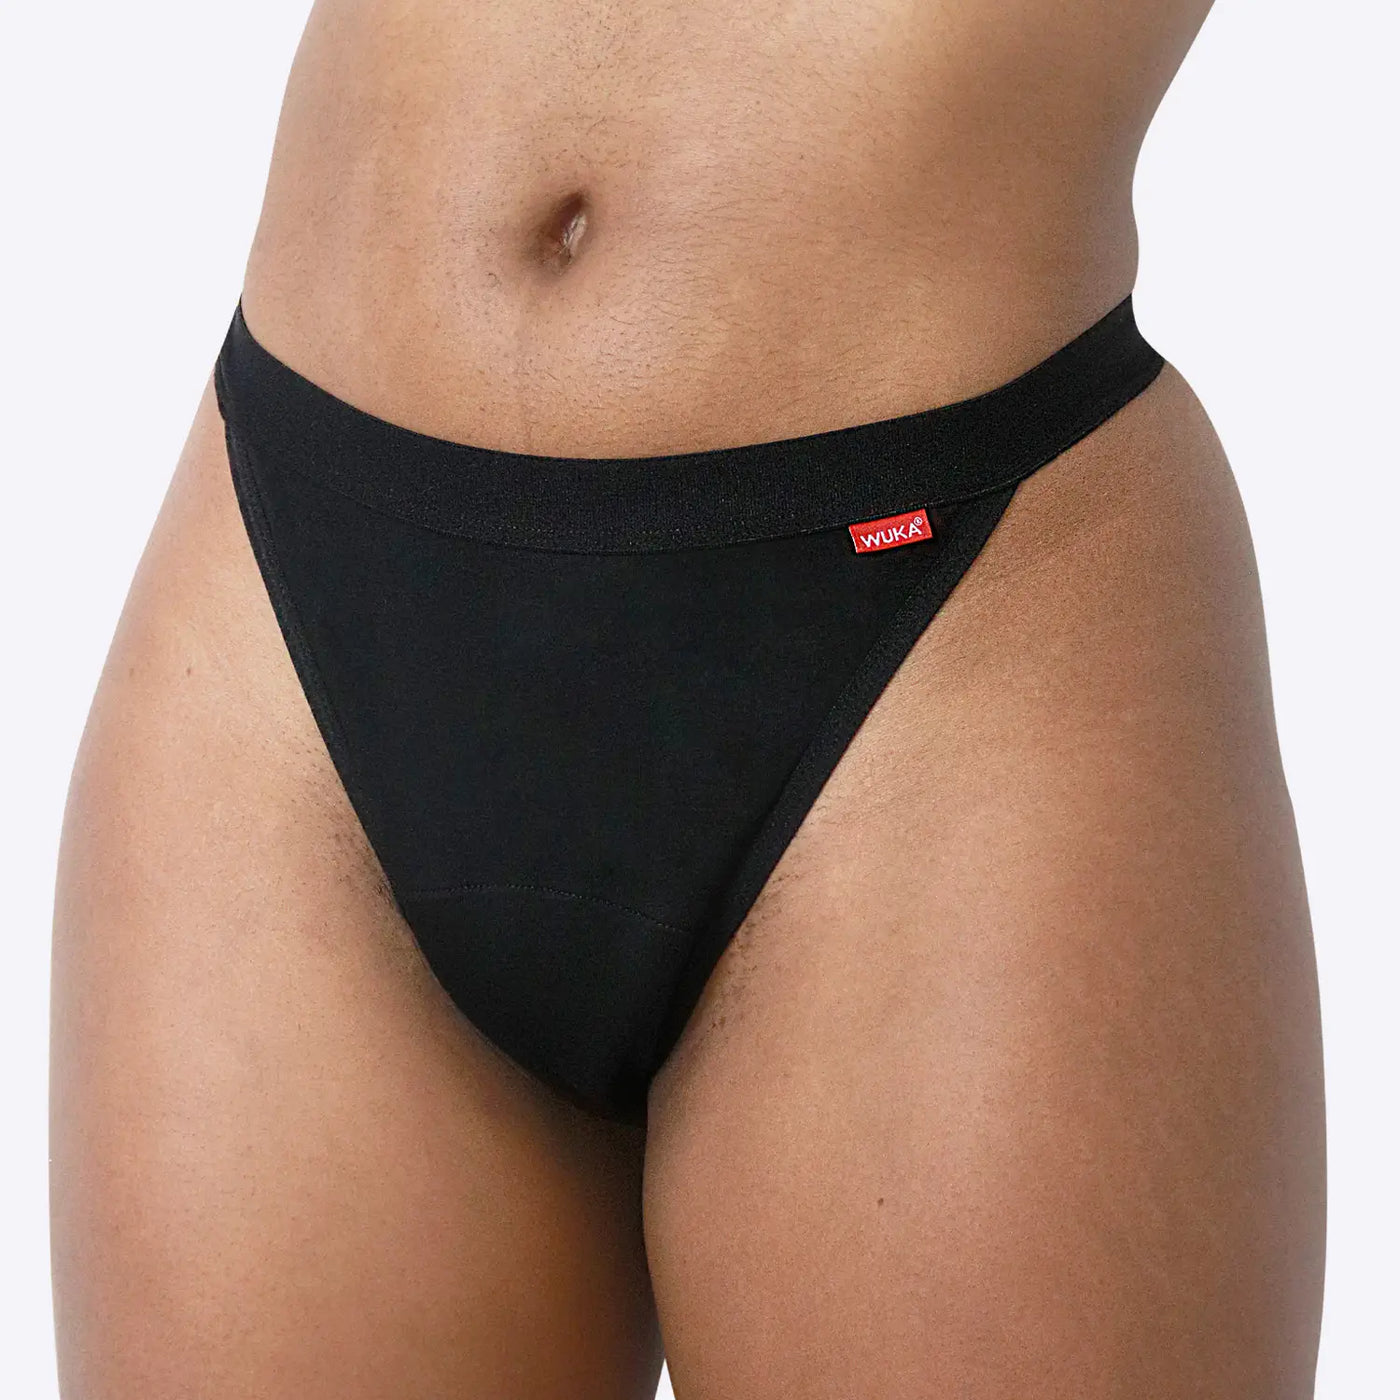 WUKA Basics Thong Period Pants Style Light Flow Black Colour Front